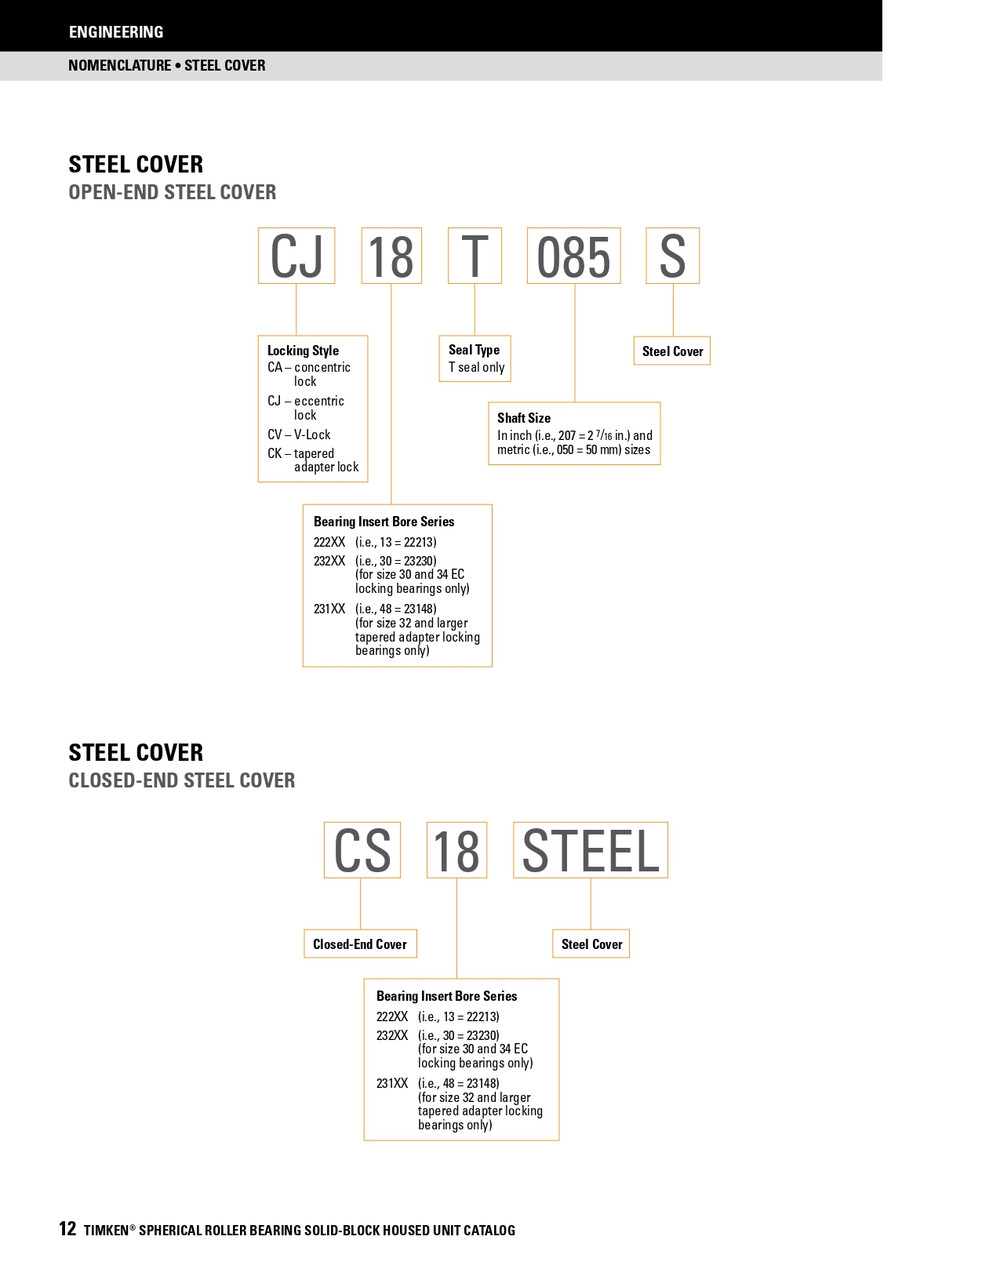 3-3/16" Timken SRB Steel Open End Cover w/Teflon Seal - QV V-Lock® Type   CV19T303S